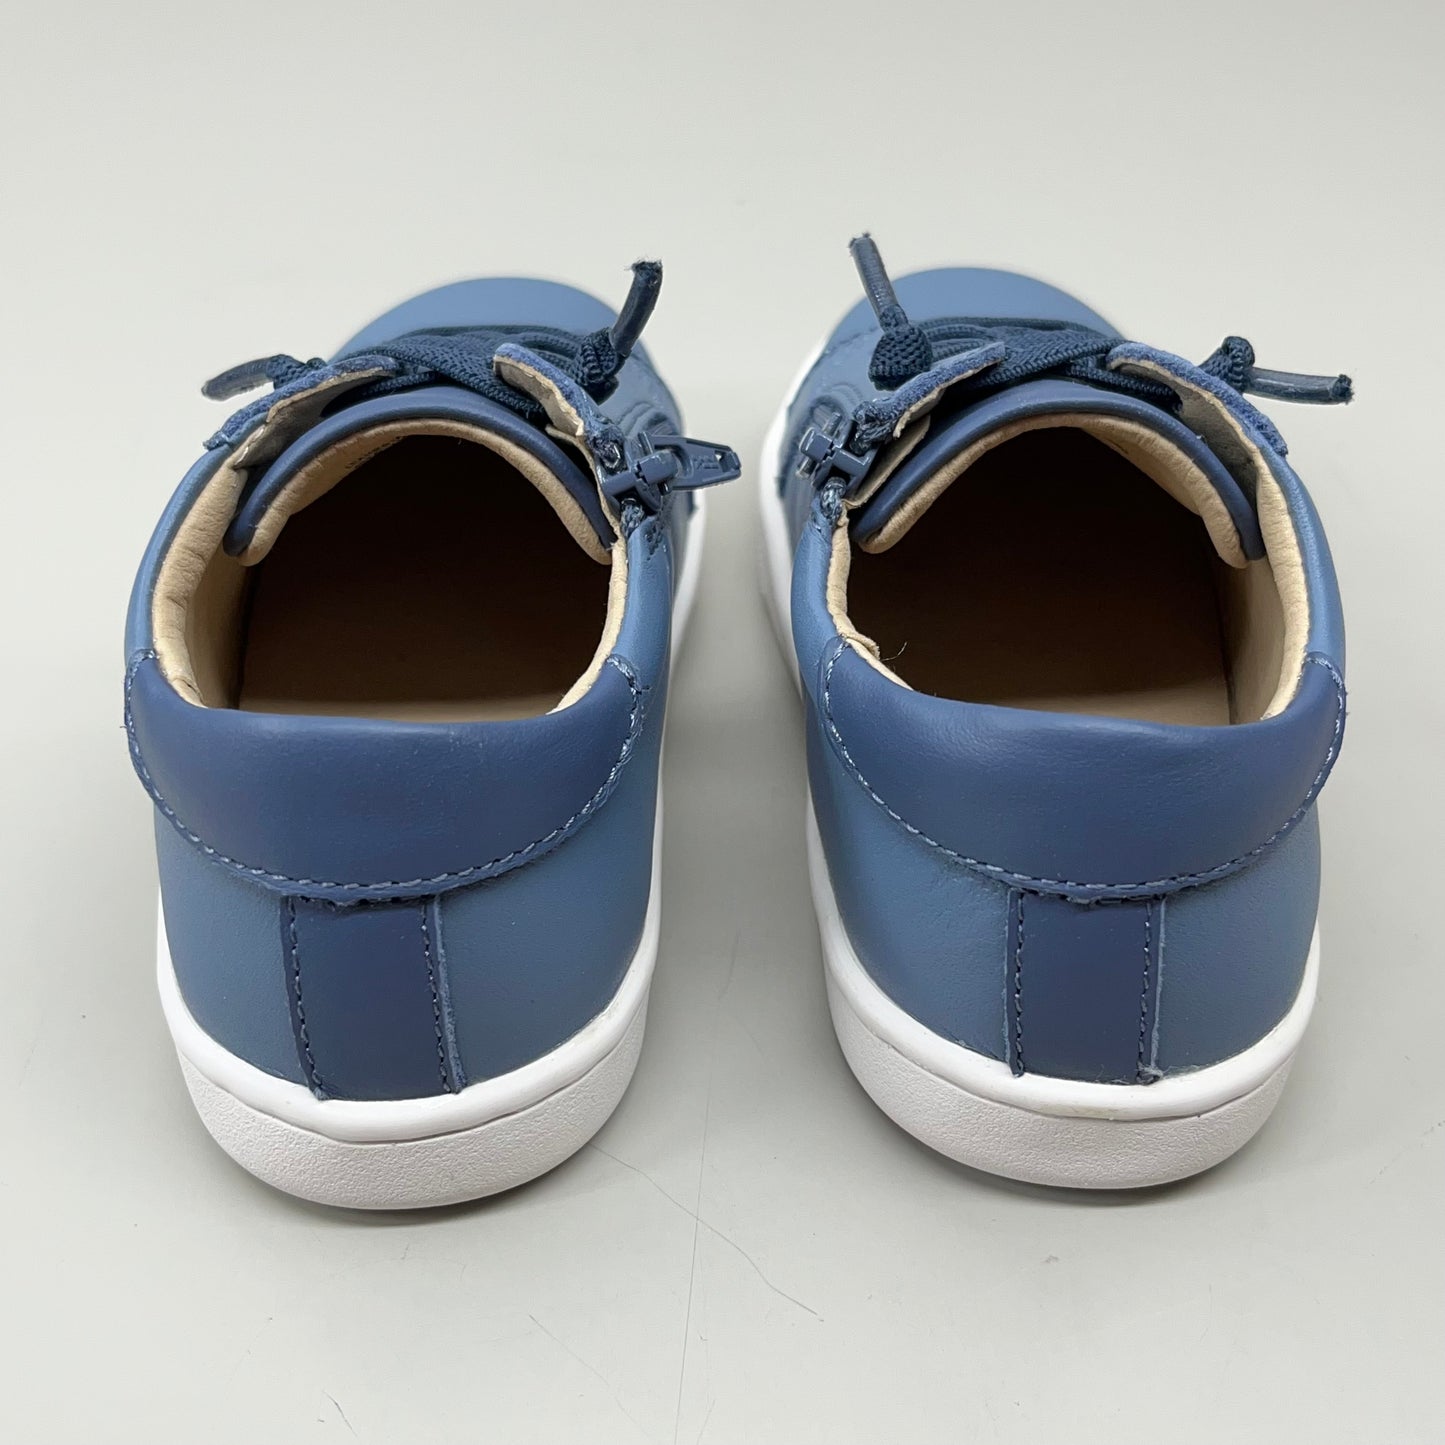 OLD SOLES Comet Runner Sneakers Kid’s Sz 31 US 13.5 Indigo/Petrol/Cream #6149